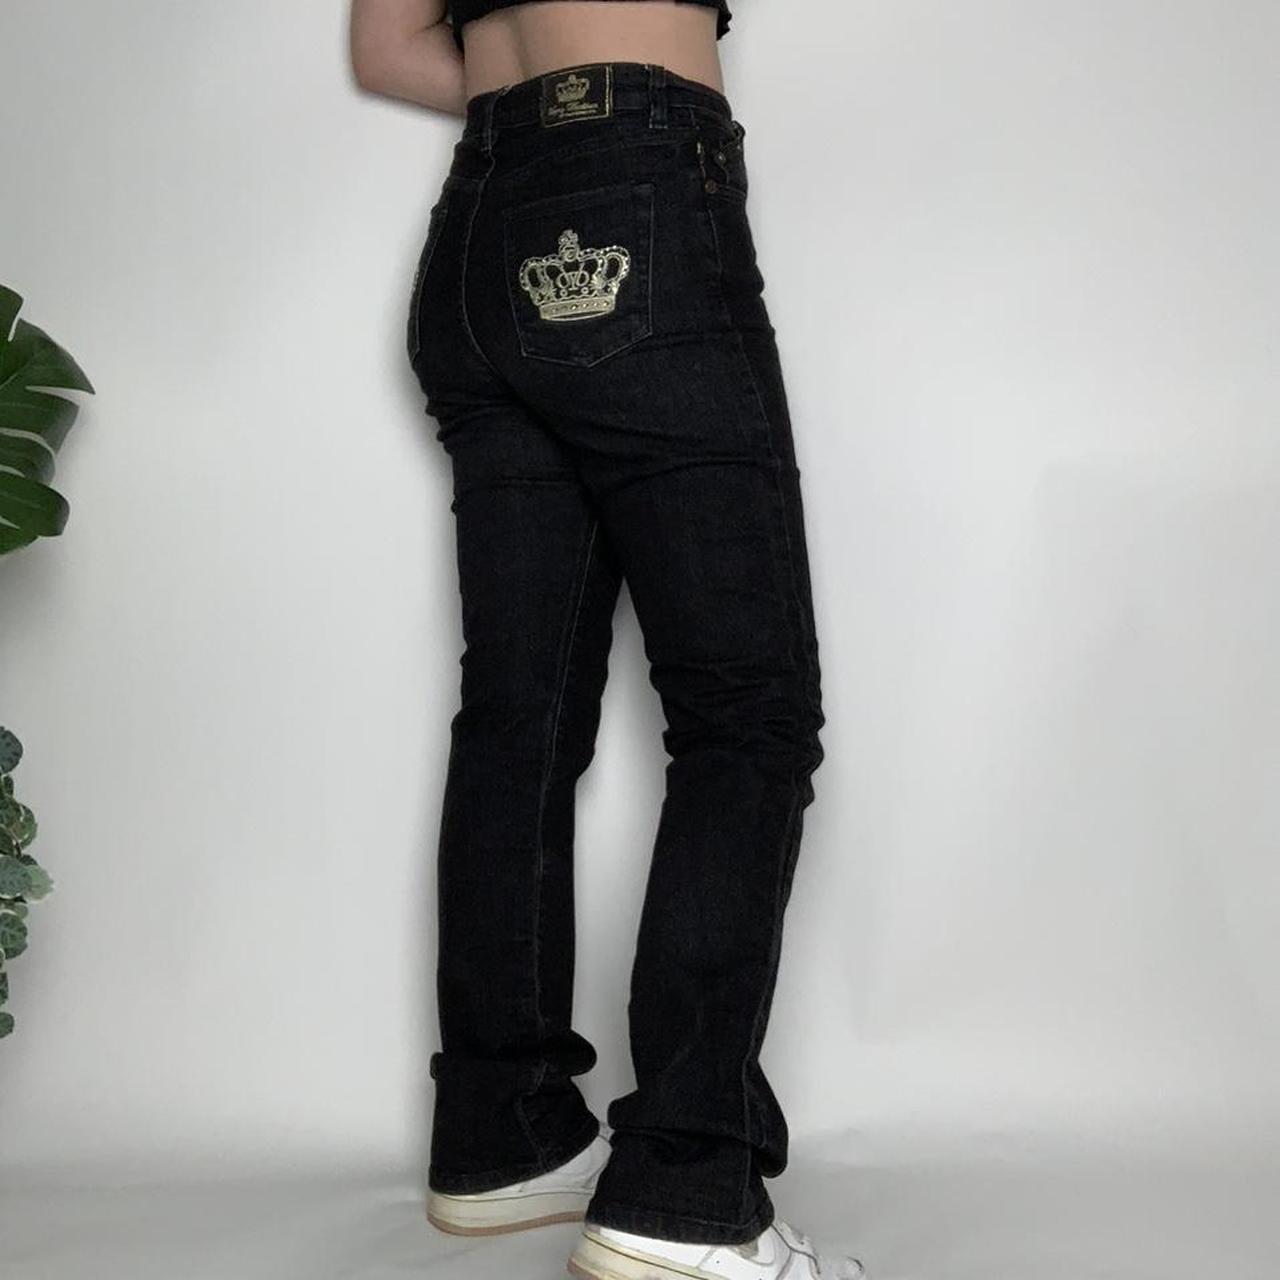 Victoria Beckham x Rock and Republic Vintage y2k black rhinestone crown Jeans